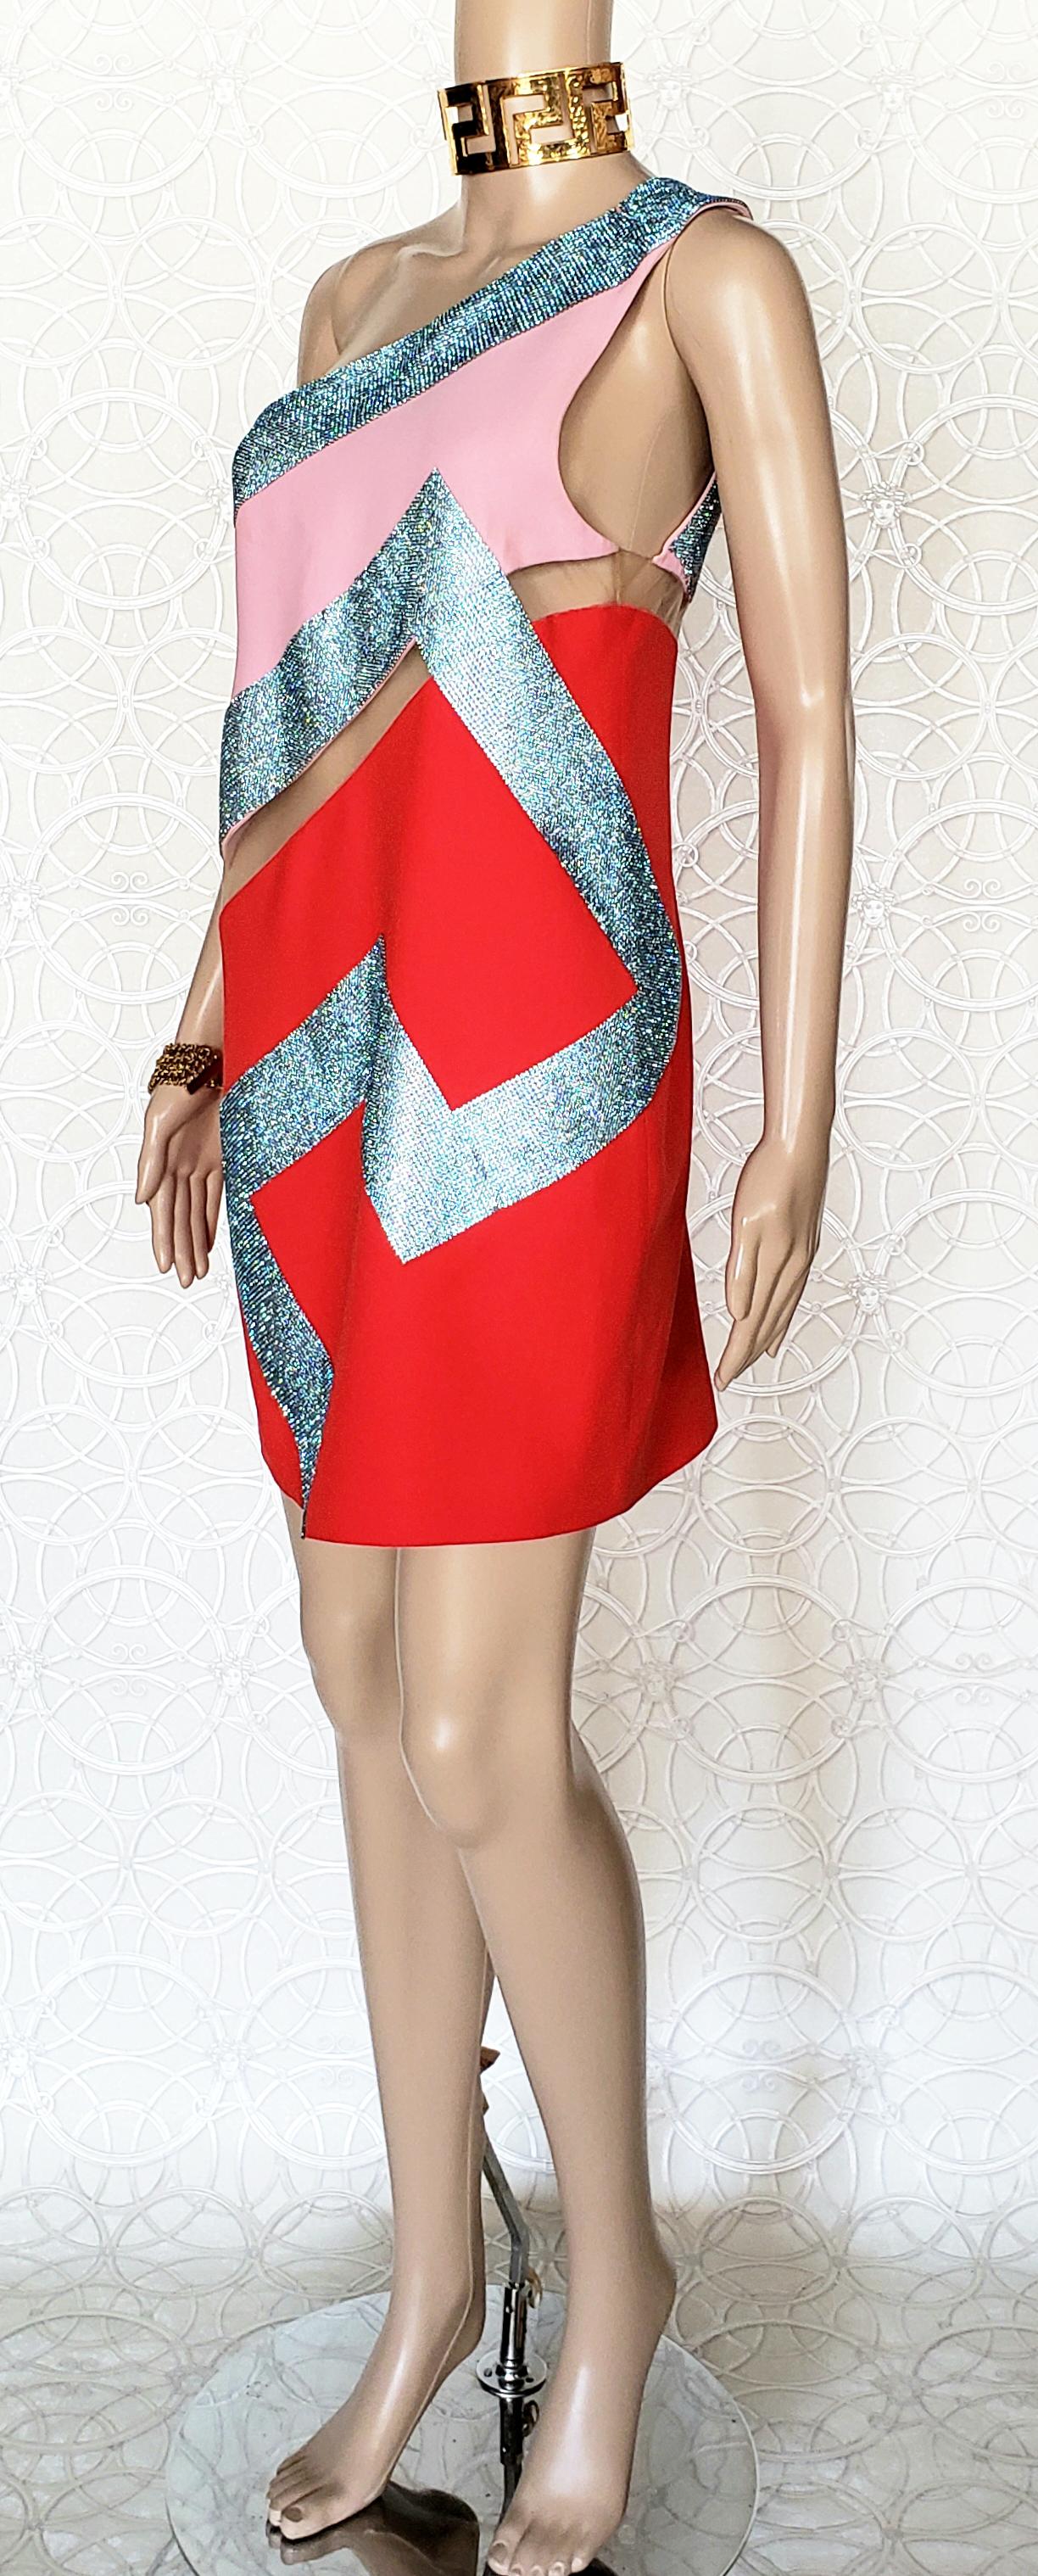 S/S 2015 look # 39 NEW VERSACE SWAROVSKI CRYSTAL EMBELLISHED MINI Dress 38 - 2 For Sale 6